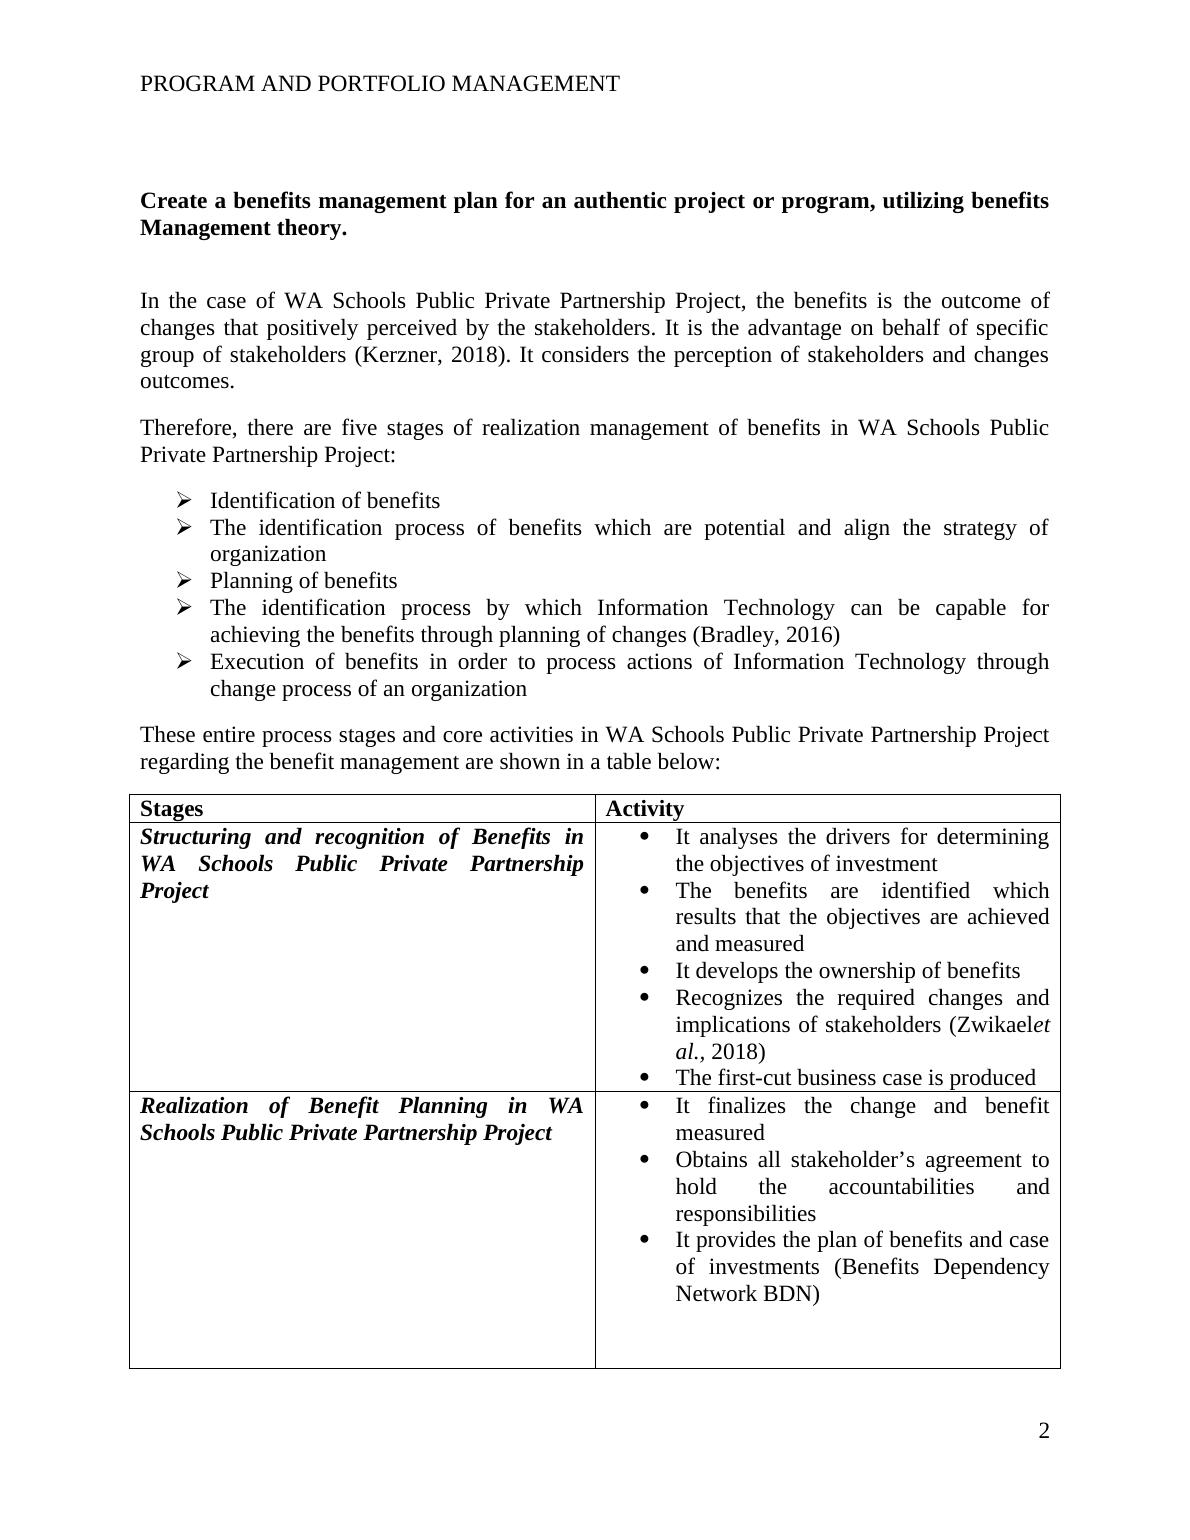 Benefits Management Plan for WA Schools Public Private Partnership Project_2